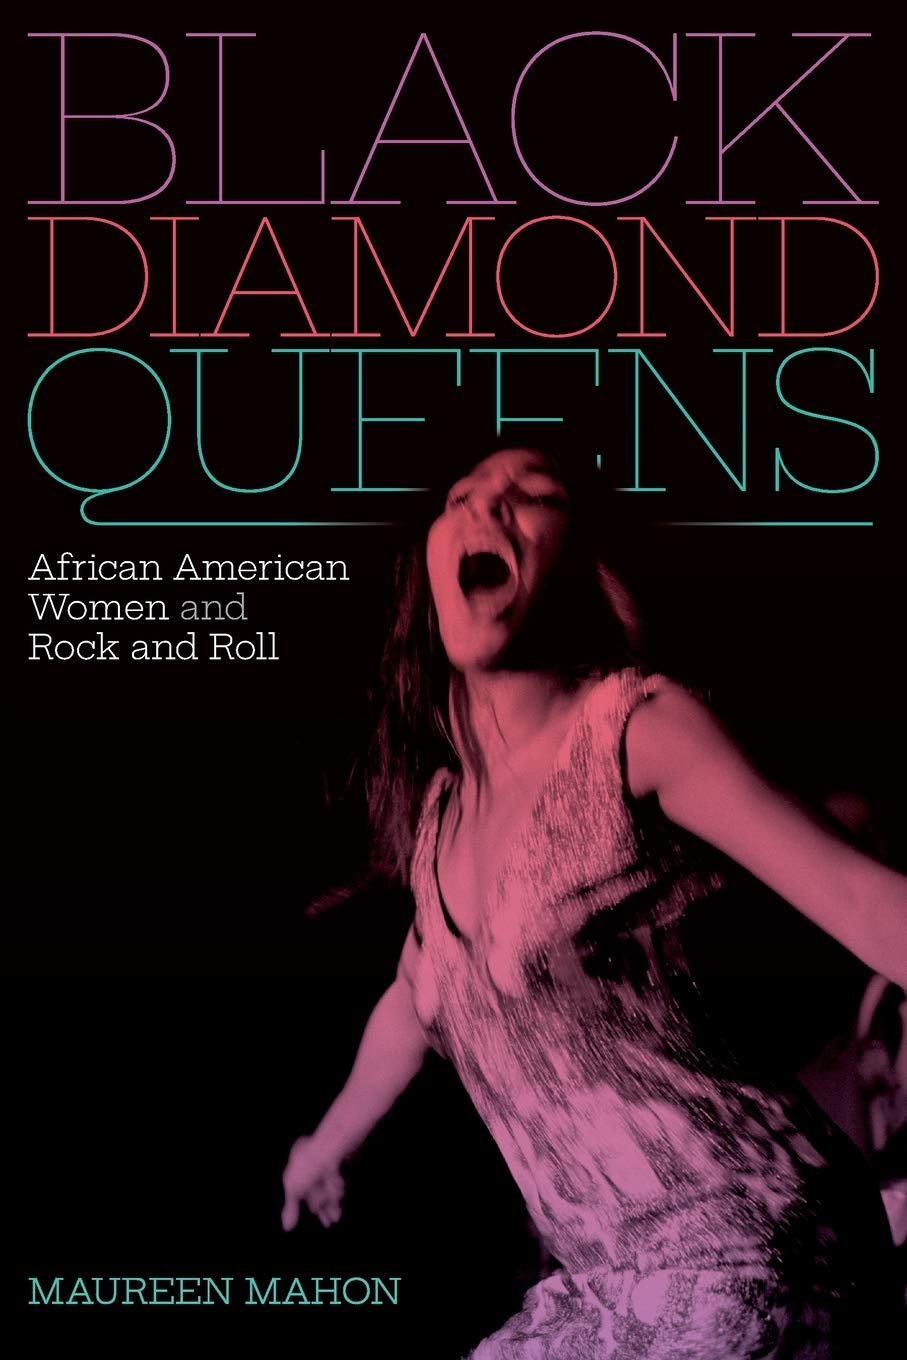 Black Diamond Queens book cover